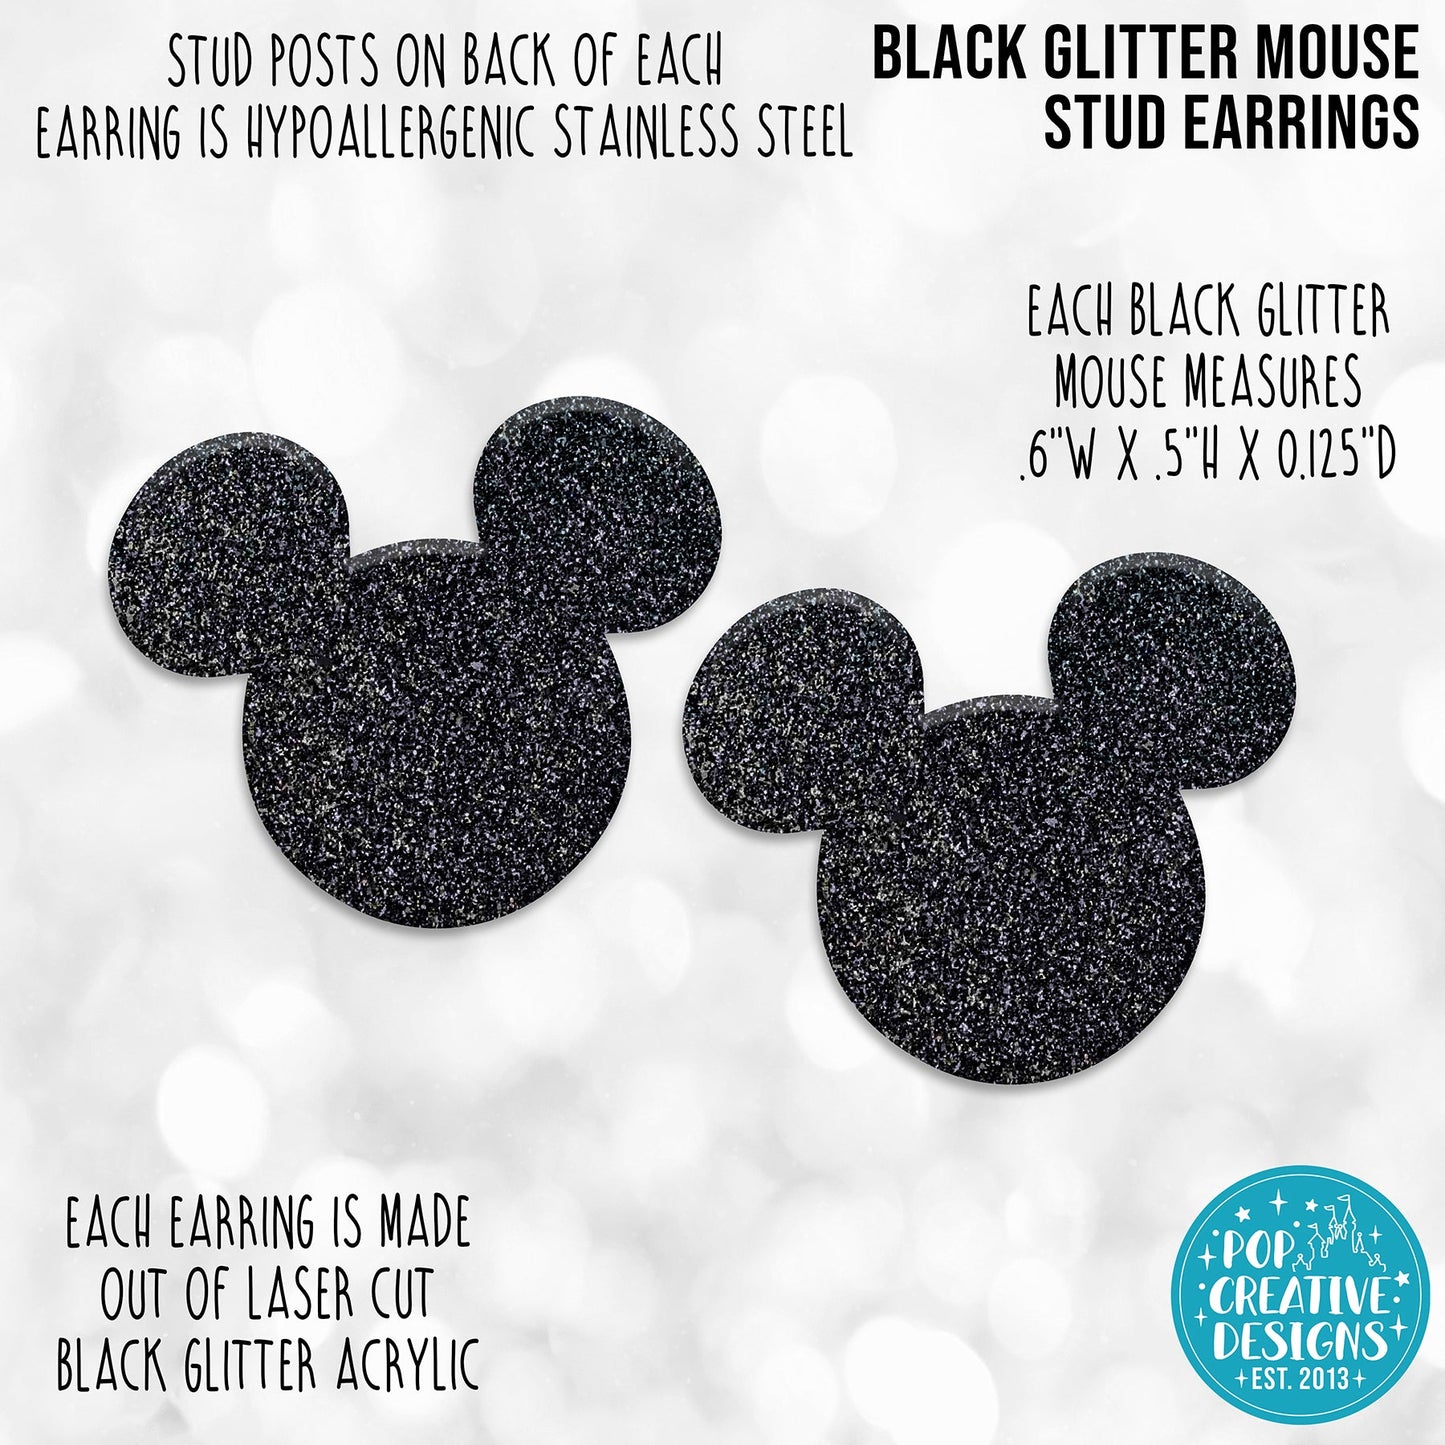 Black Glitter Mouse Stud Earrings